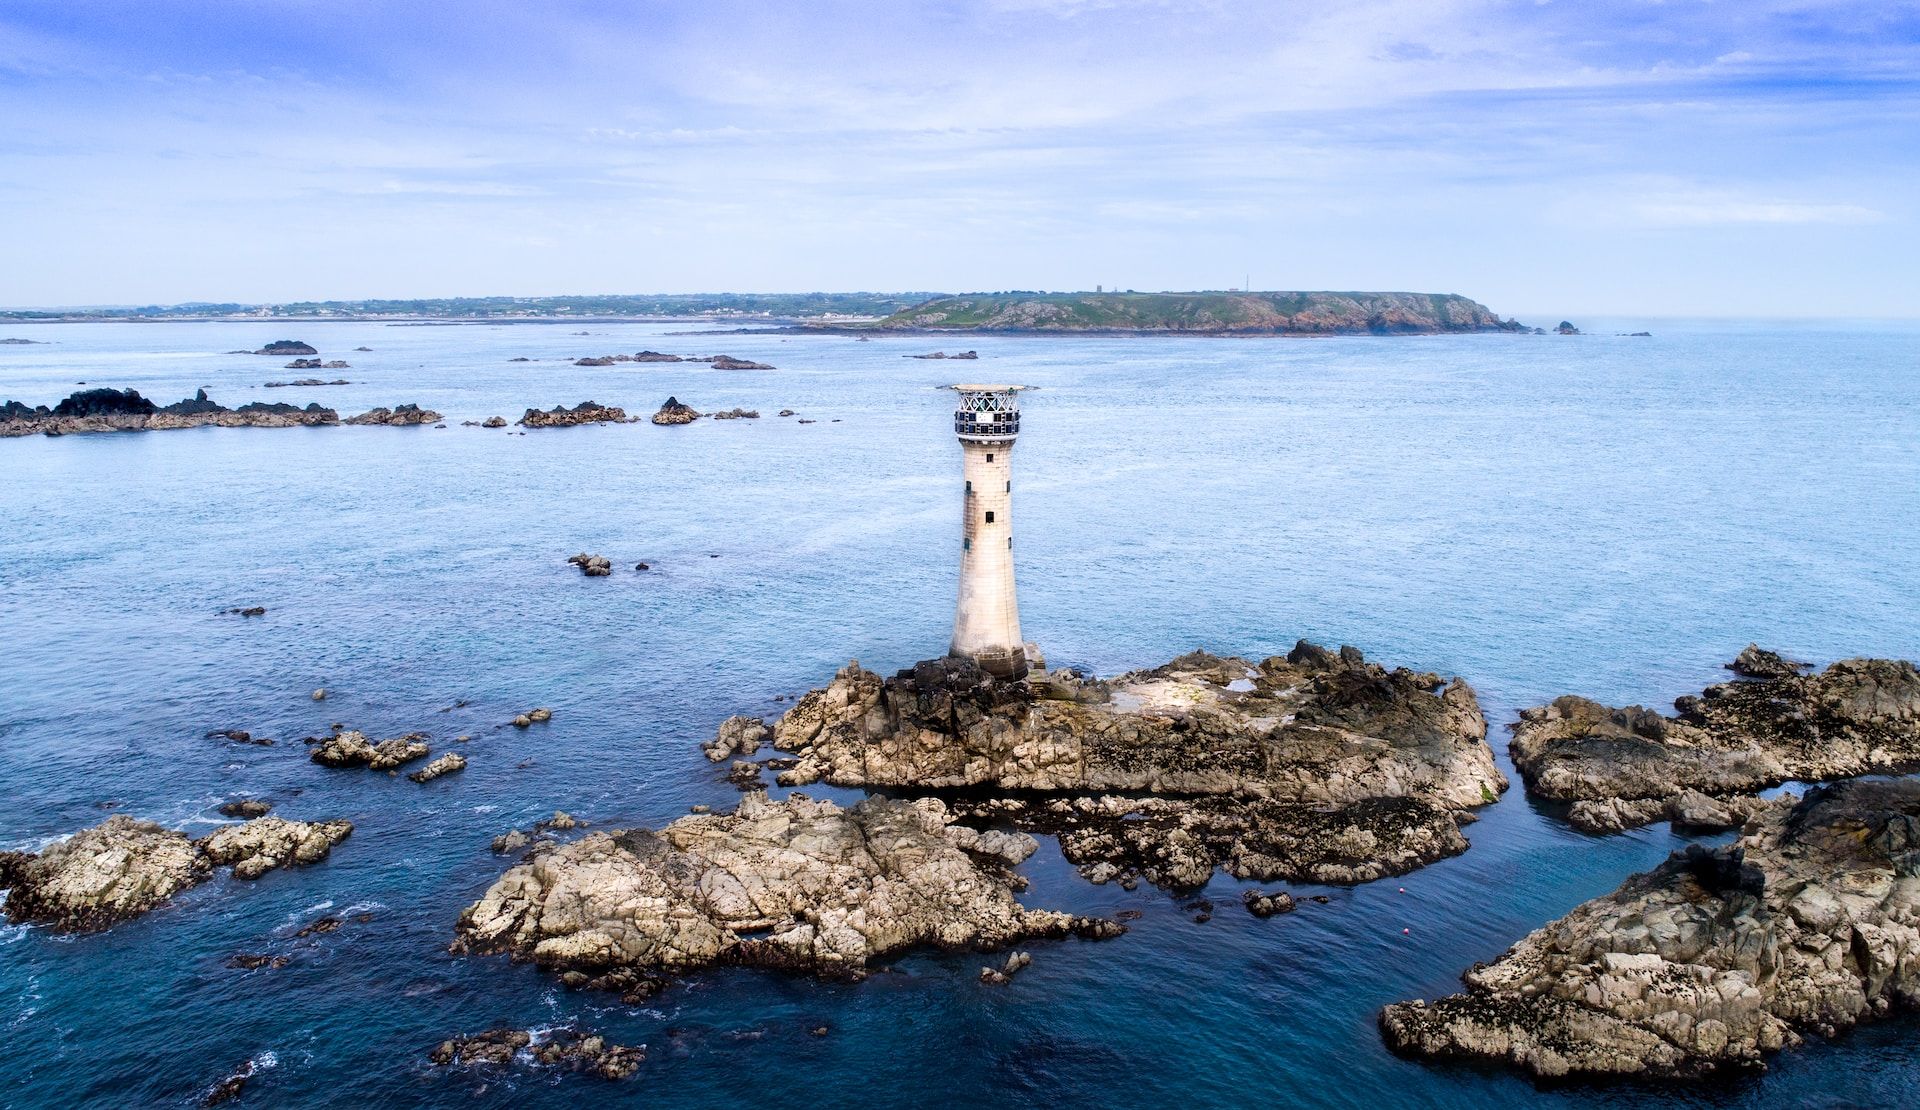 Hanois Lighthouse, La Forêt, Guernsey